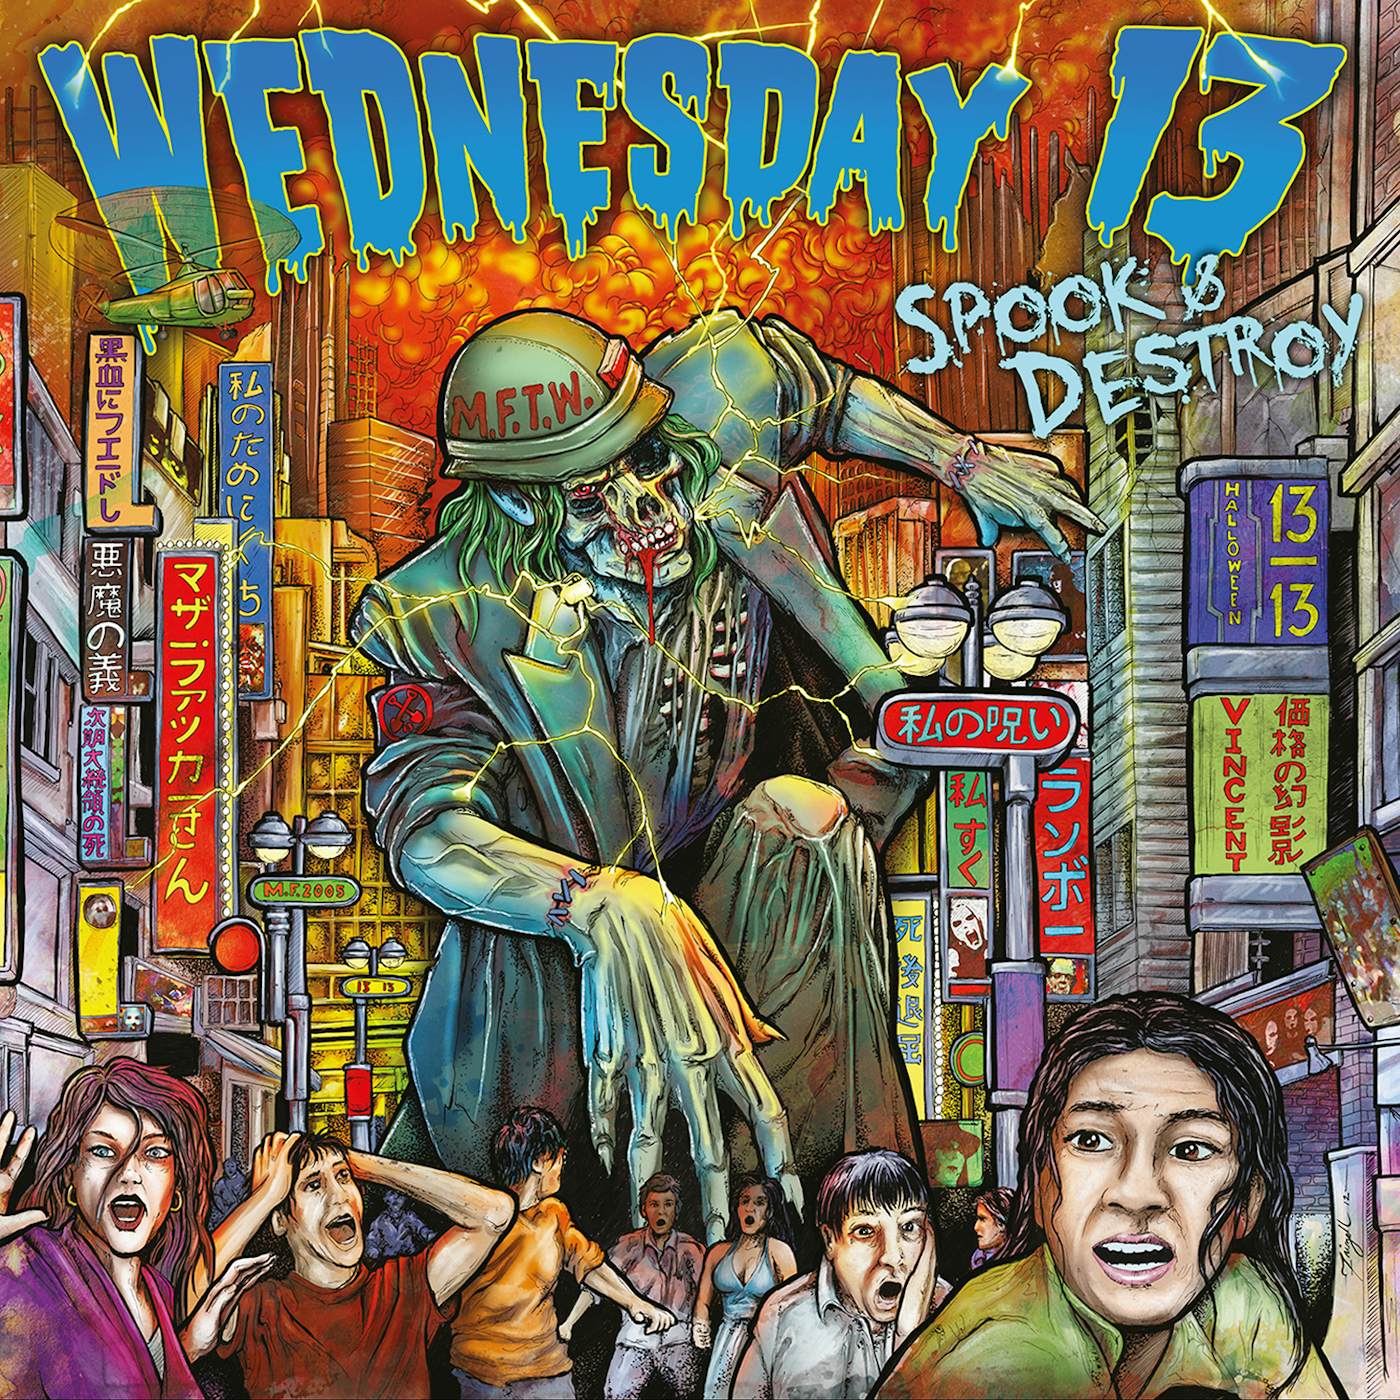 Wednesday 13 SPOOK & DESTROY CD